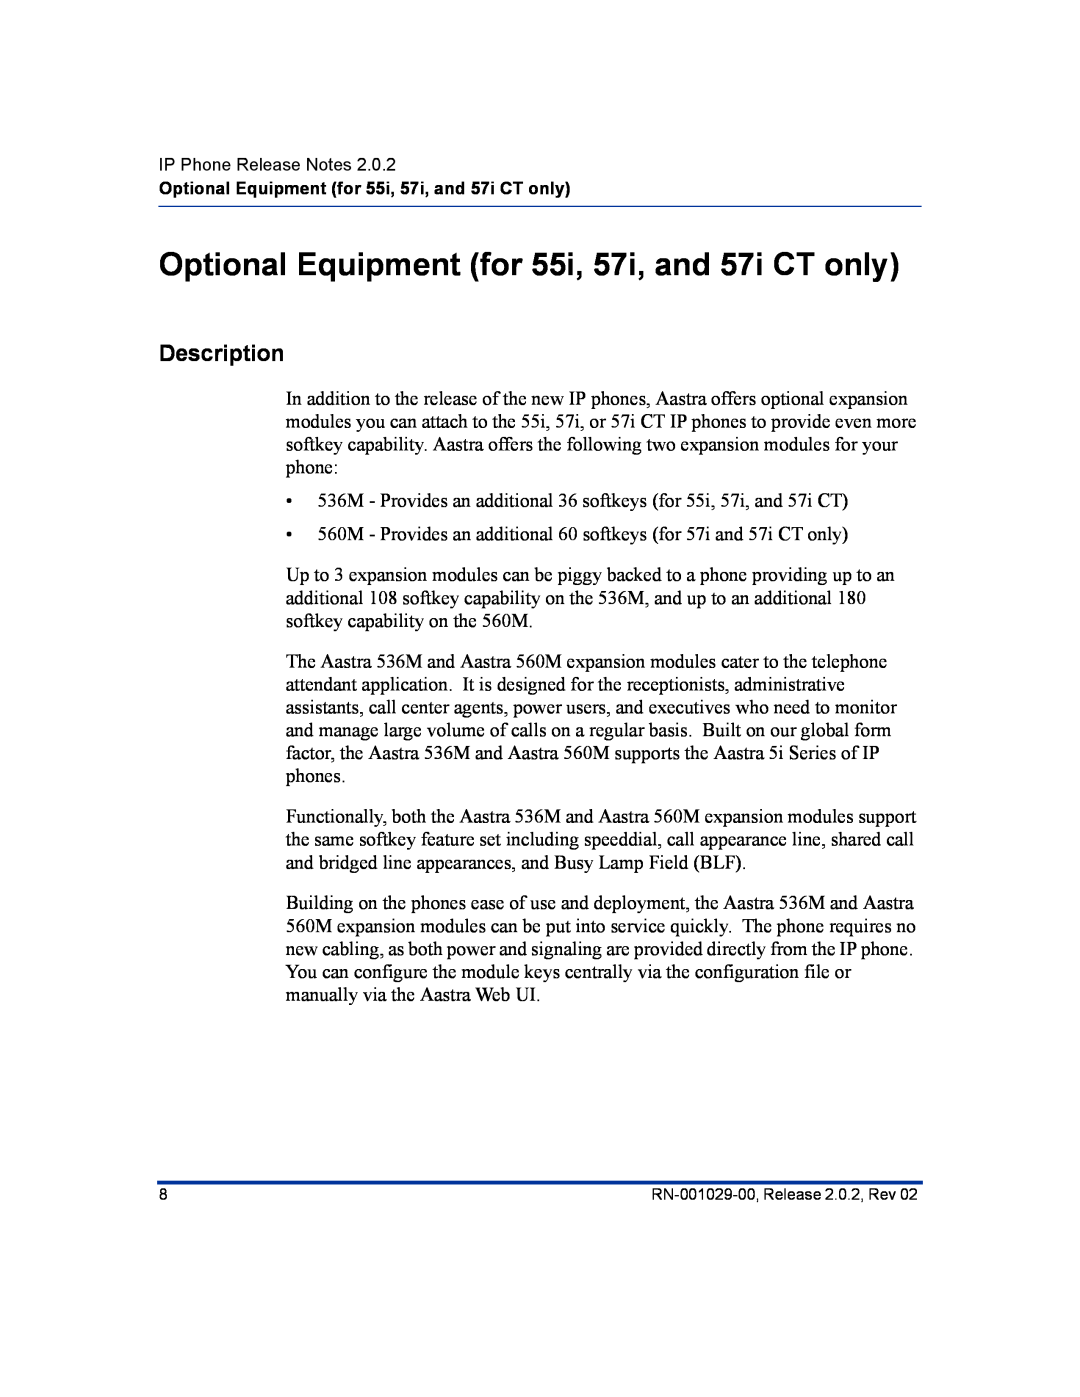 Aastra Telecom 57I CT, 55I manual Optional Equipment for 55i, 57i, and 57i CT only, Description 